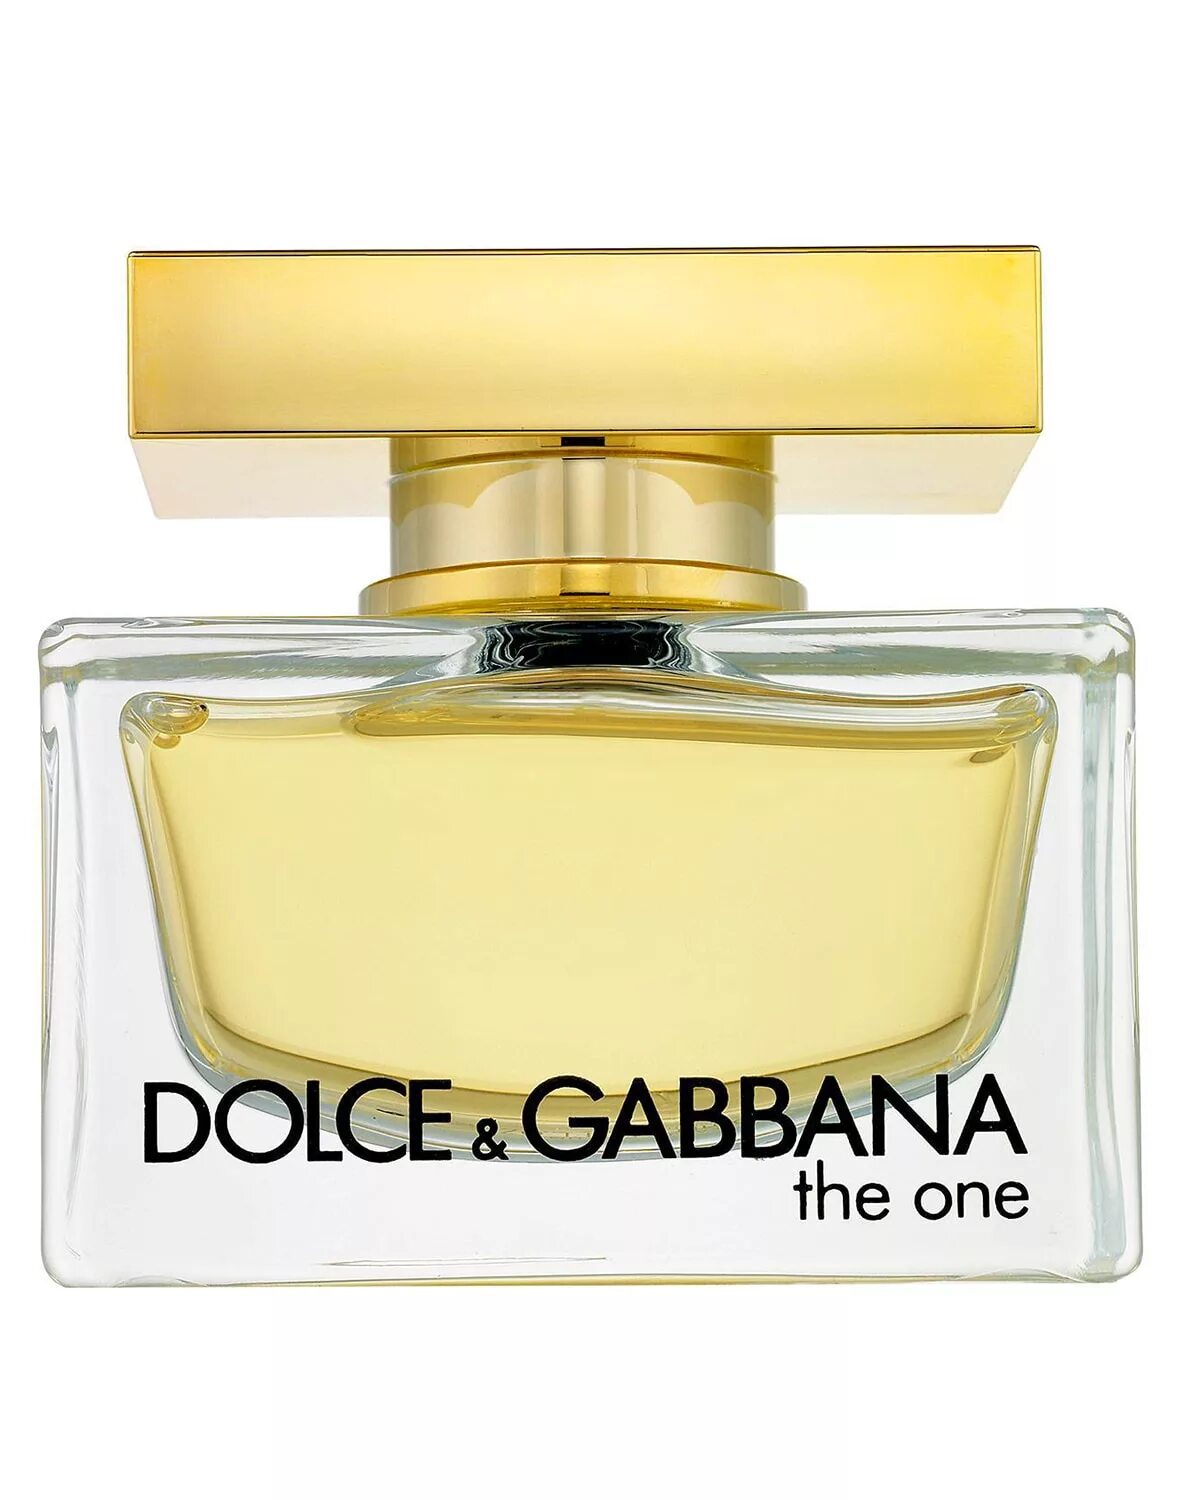 Духи дольче габбана зе ван. Духи лольче габано Зевар. Dolce & Gabbana the one women EDP, 75 ml. Dolce Gabbana the one 50ml. Dolce Gabbana the one 75 ml.